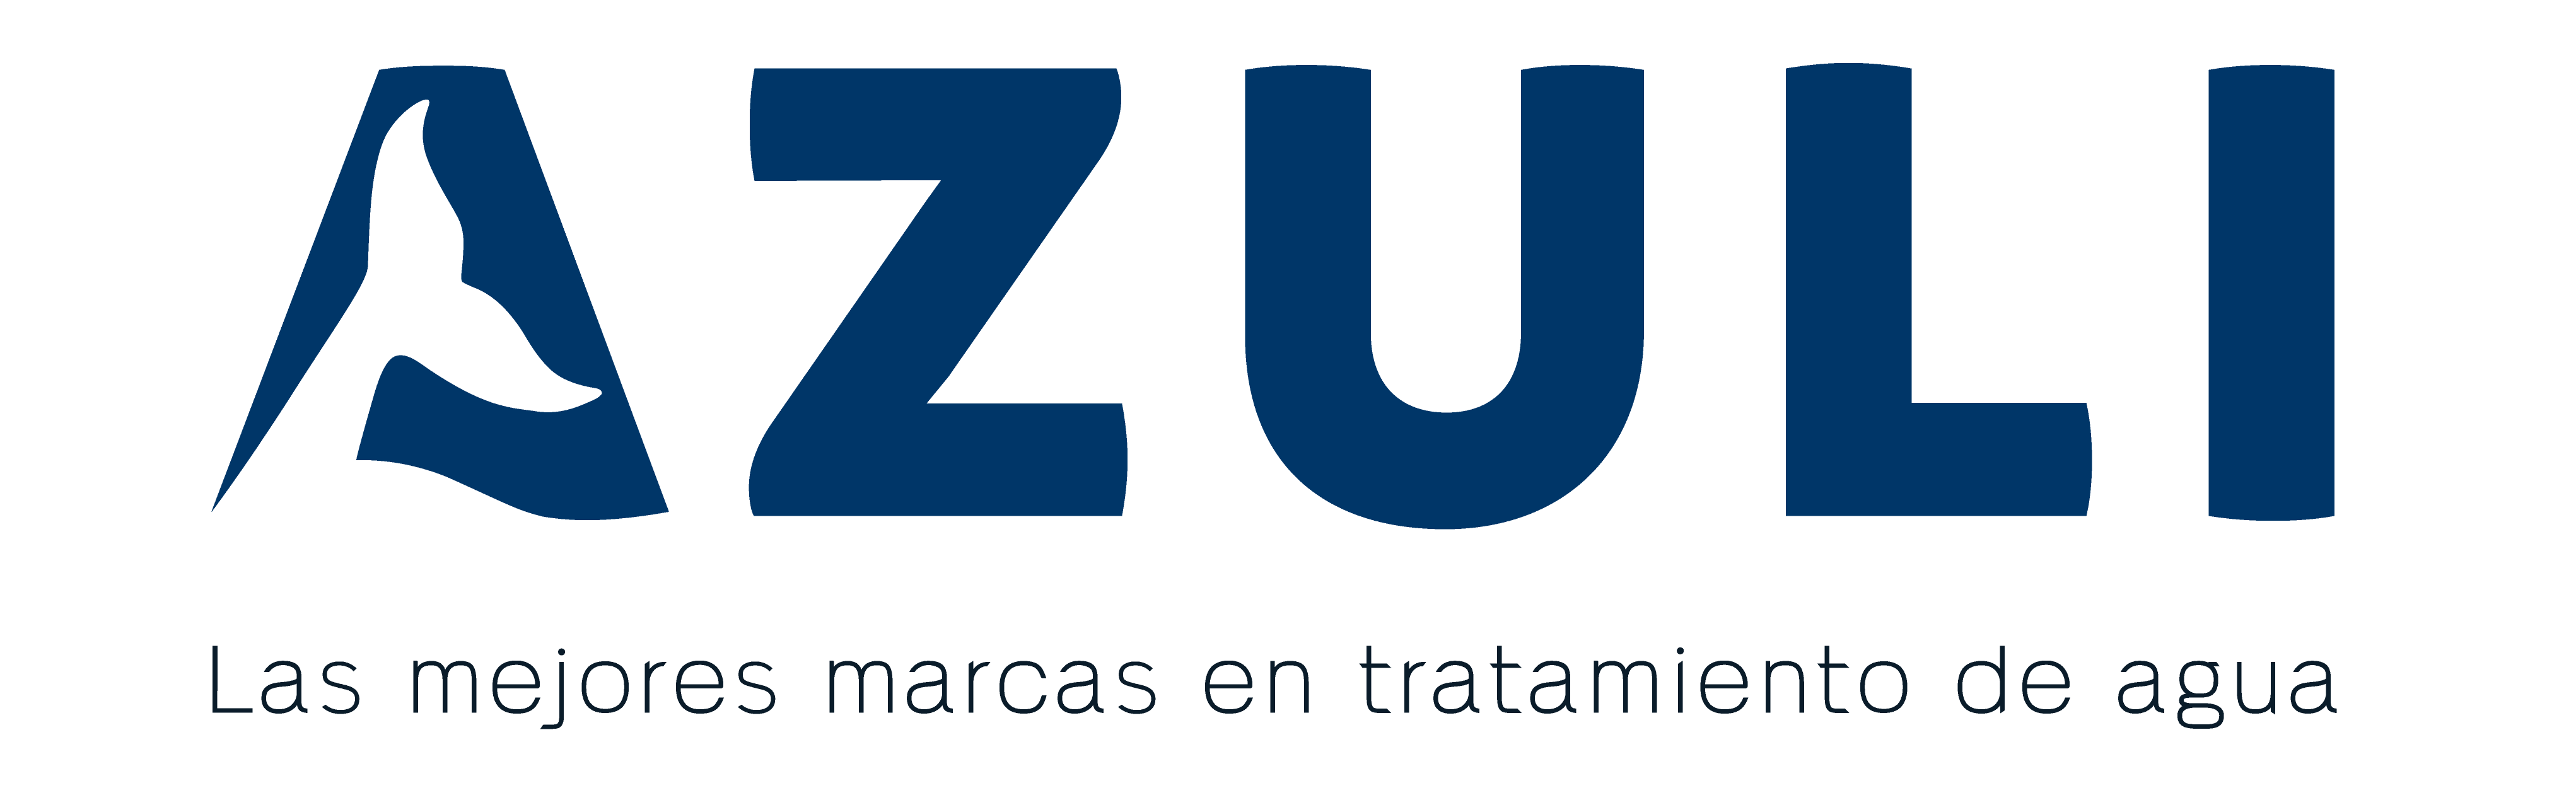 Azuli MX